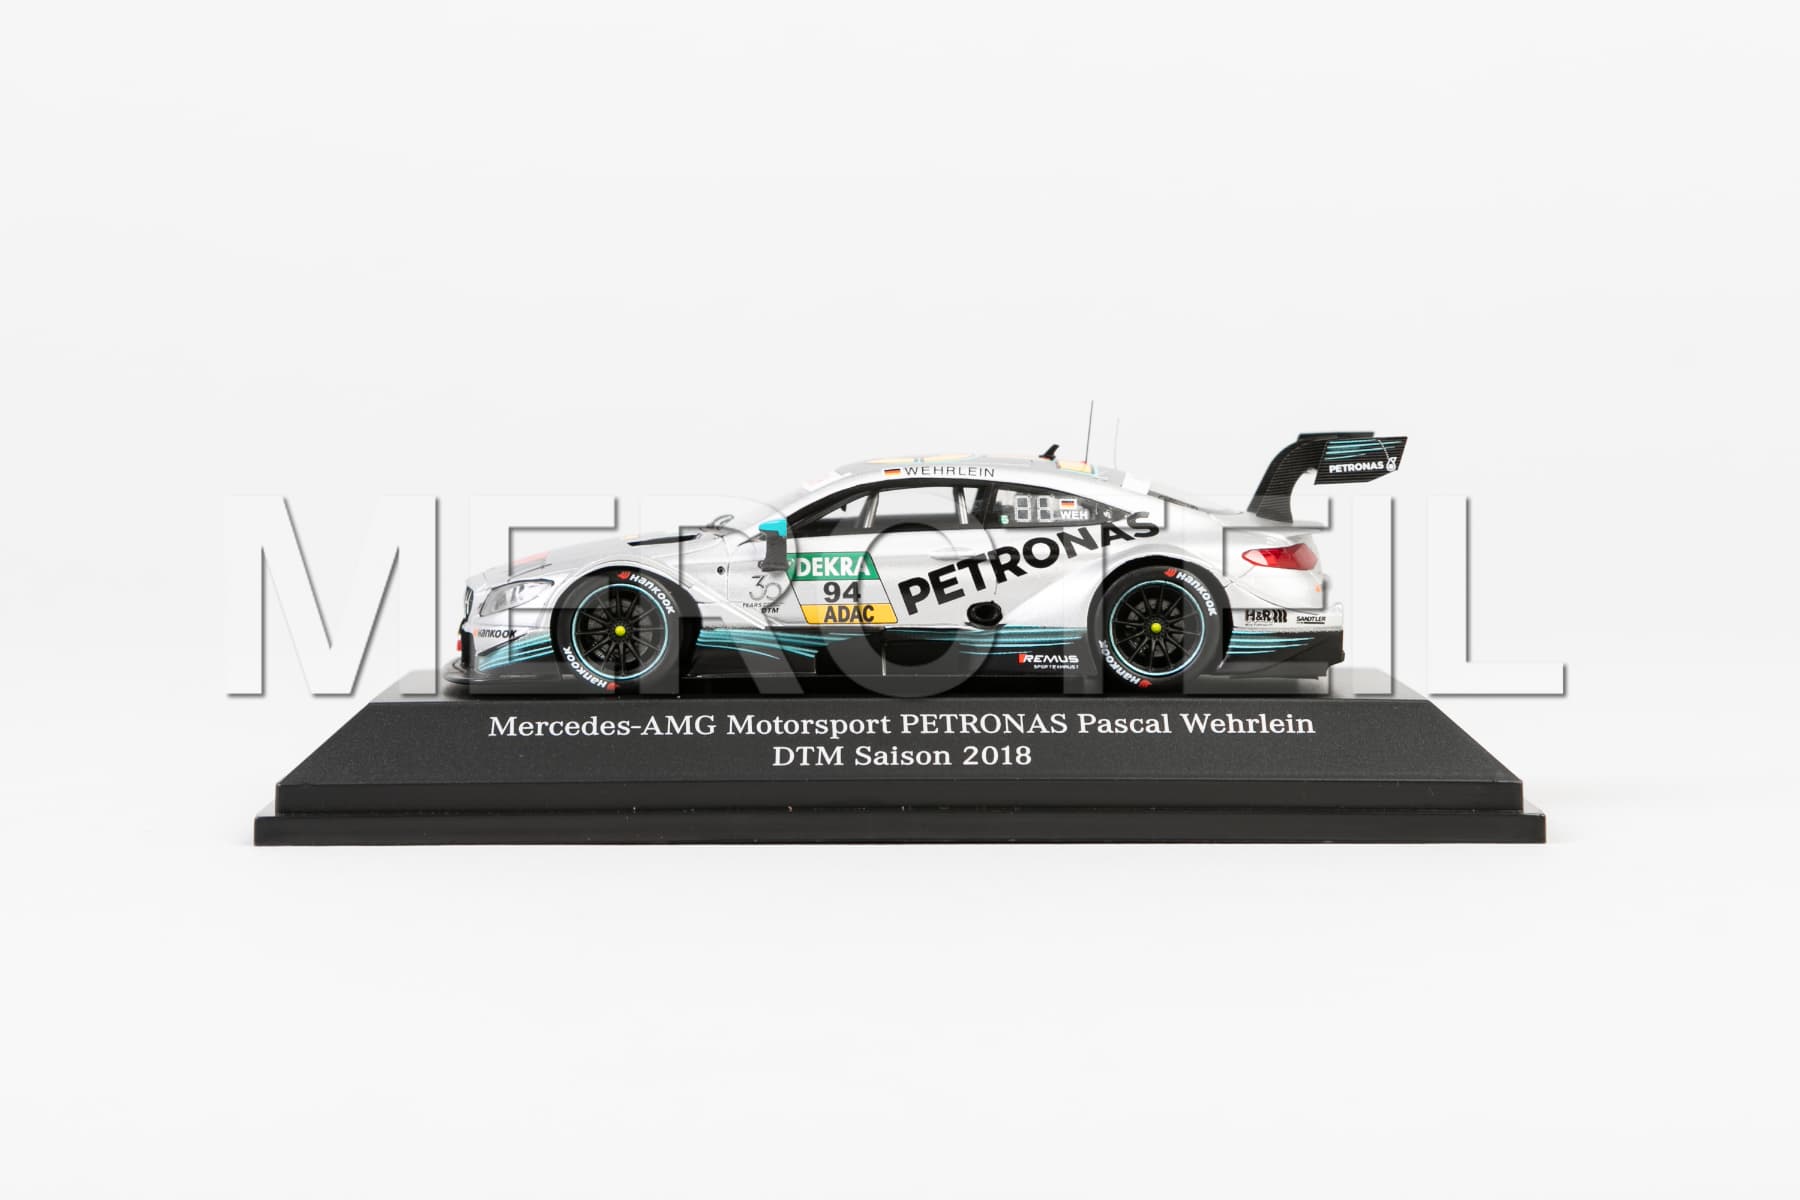 AMG DTM Motorsport Silver Arrow Team Petronas 1:43 Scale Genuine Mercedes-AMG by Minimax B66960476